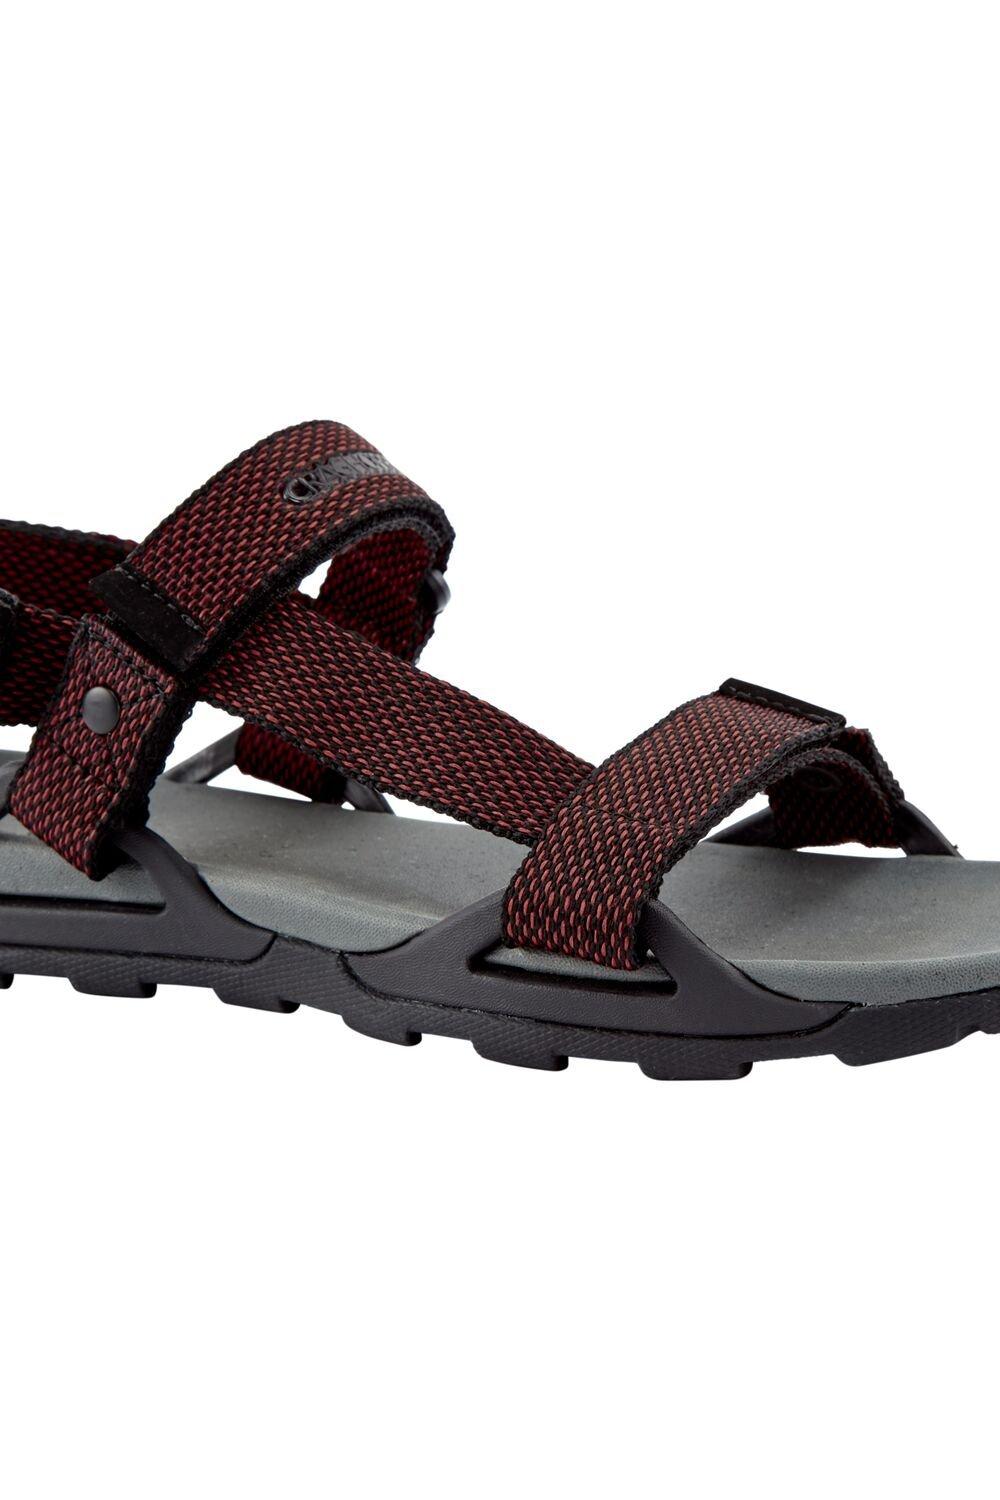 'nosilife locke' adjustable walking sandals